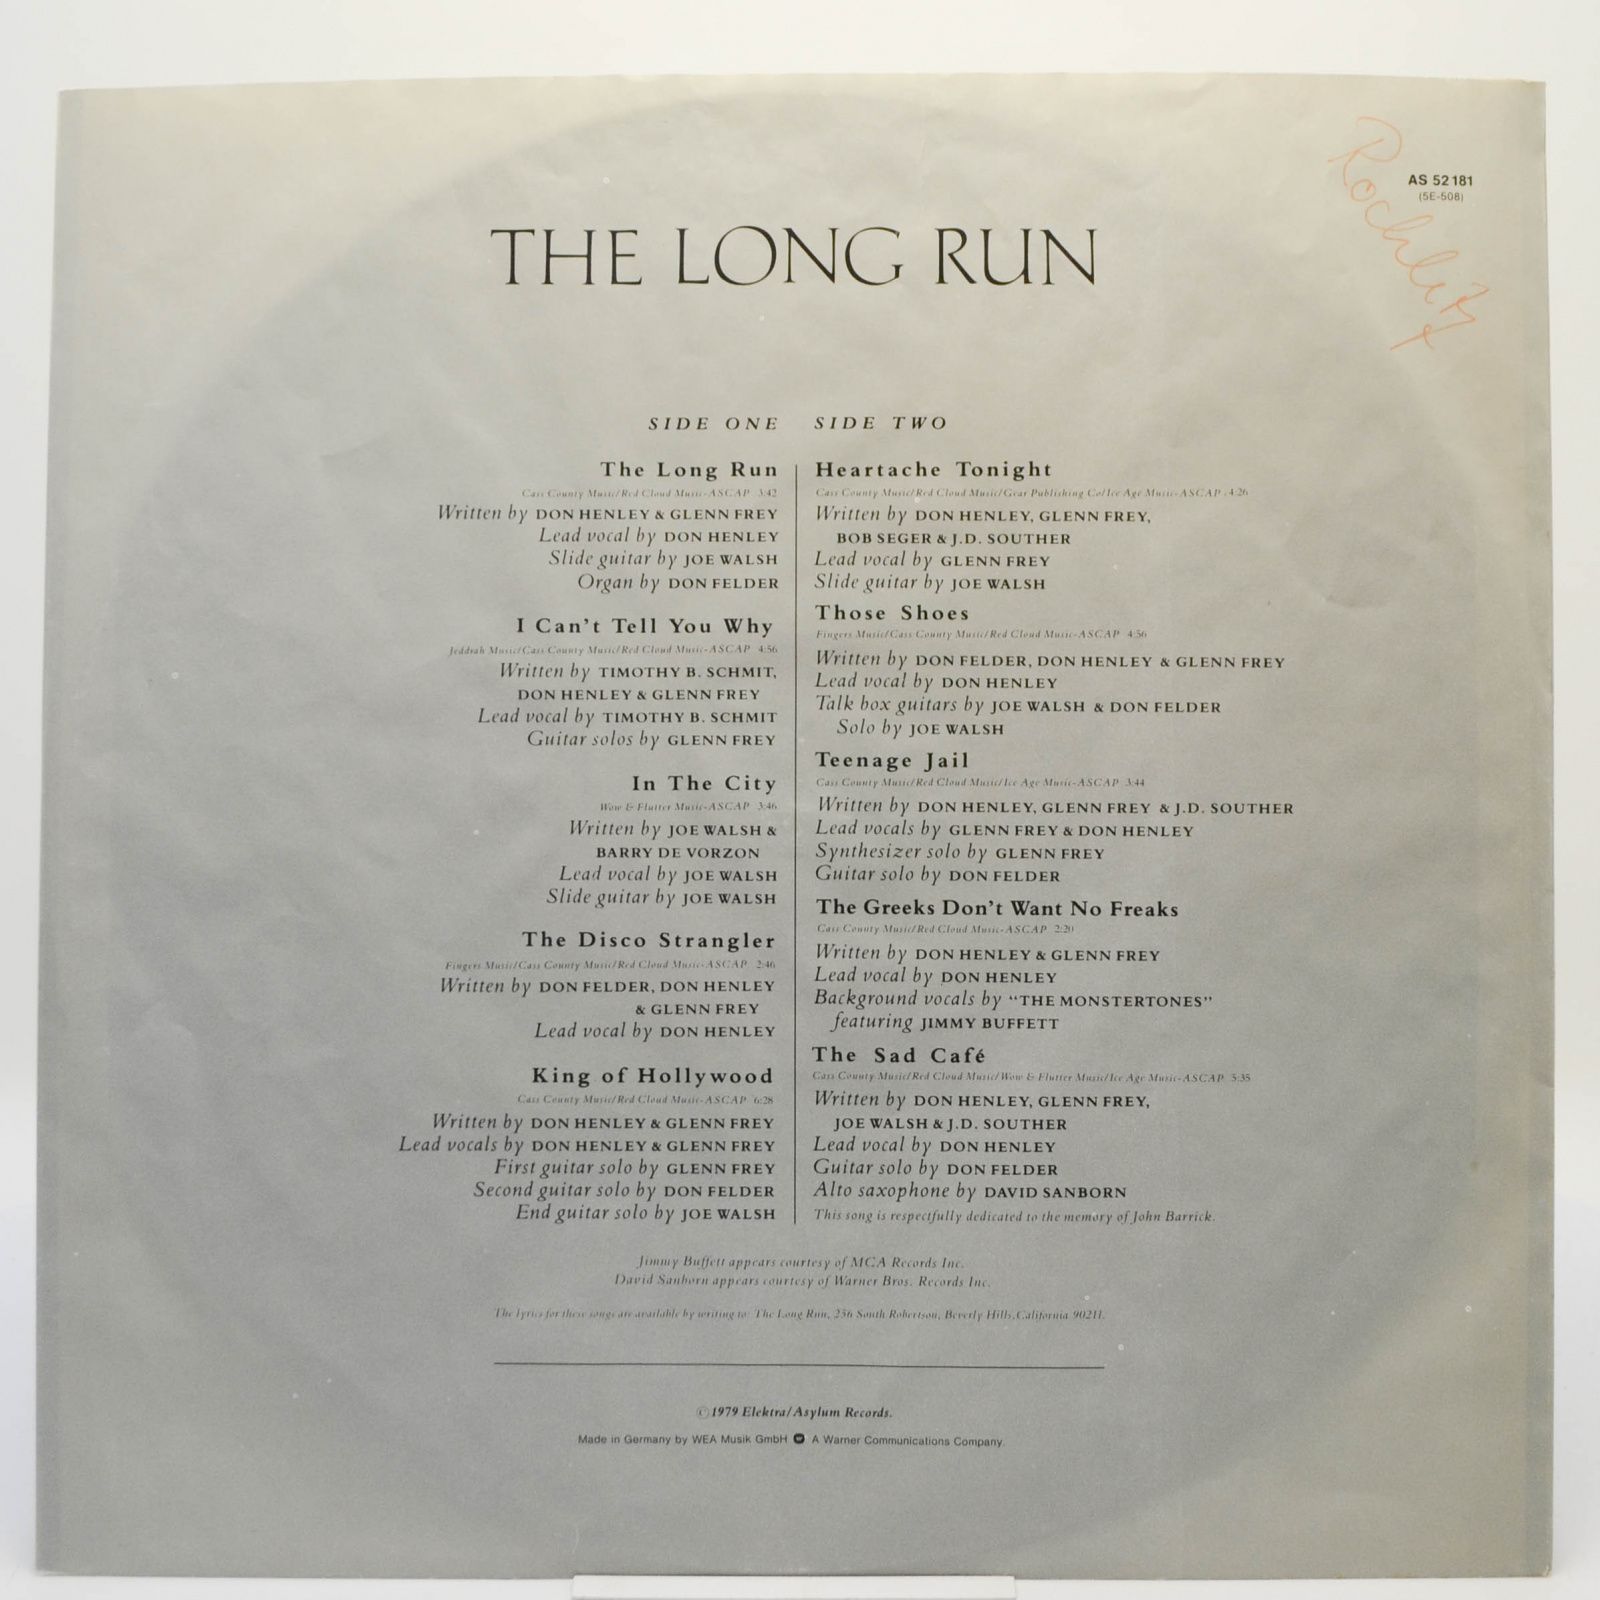 Eagles — The Long Run, 1979